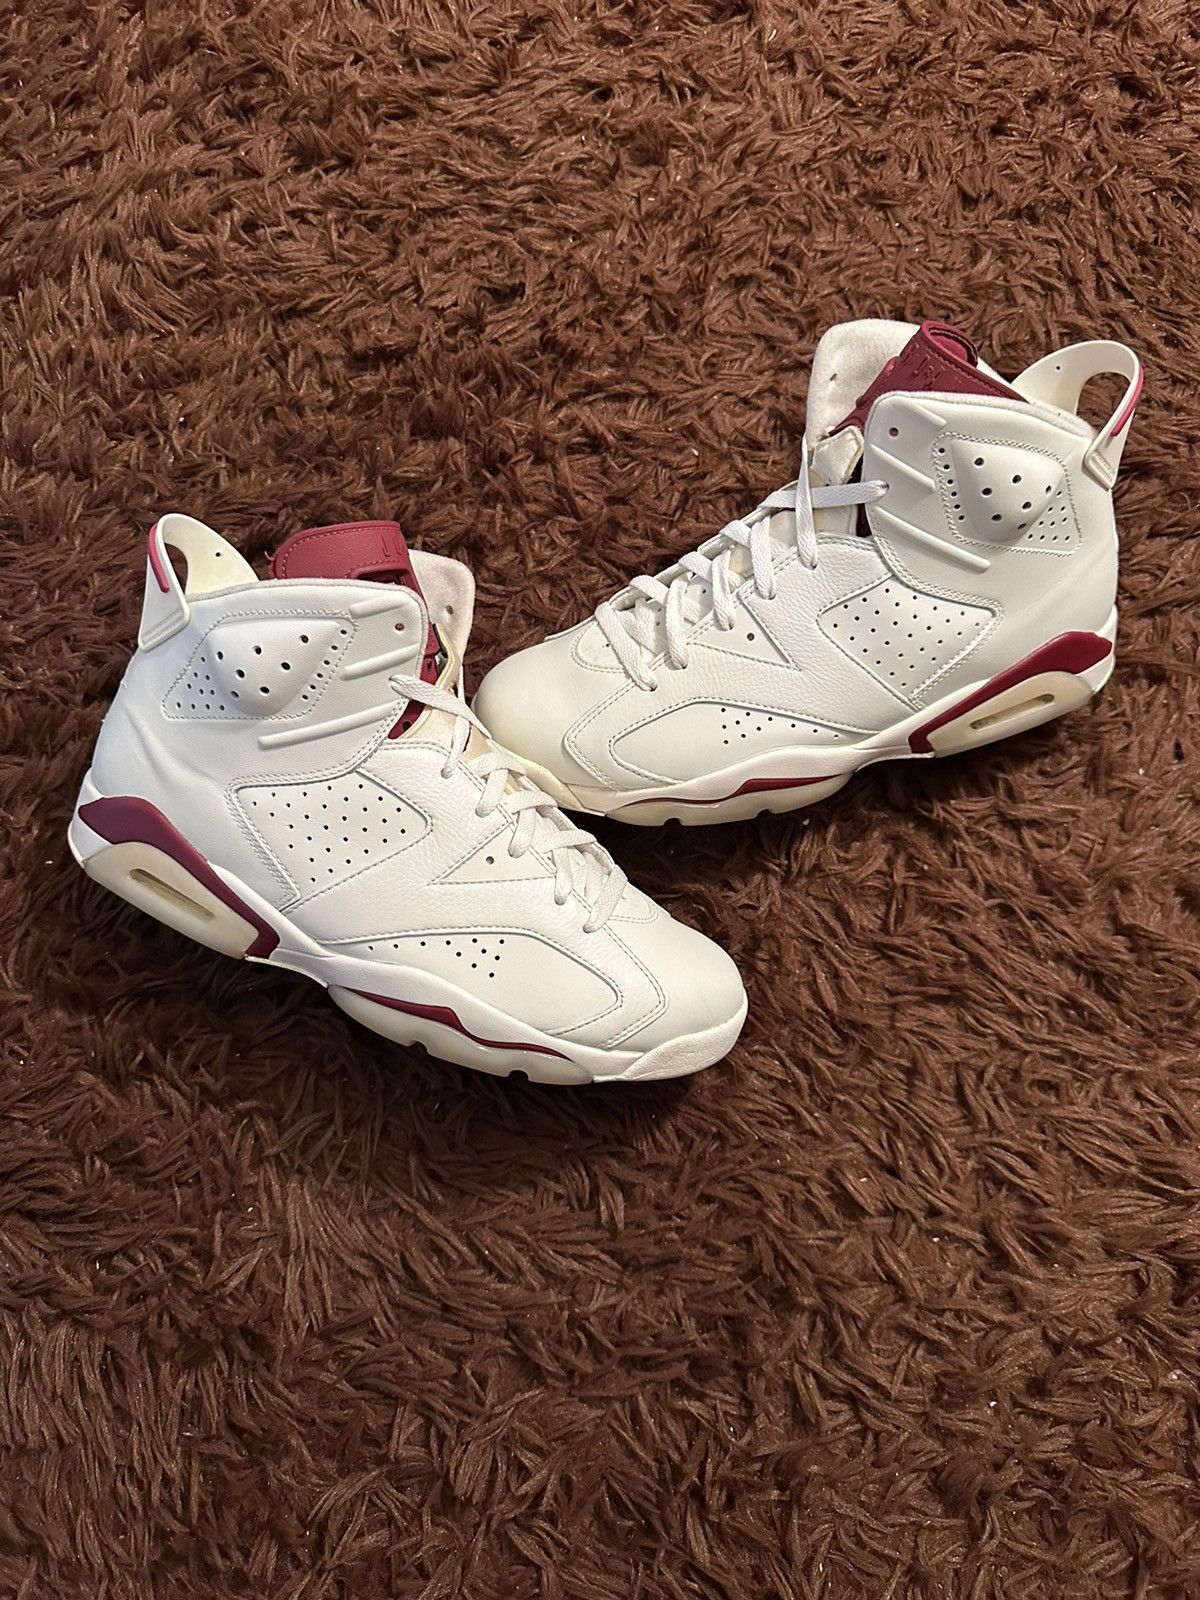 Pre-owned Jordan Brand 2015 Jordan 6 Maroon Size 11 No Box Shoes In White